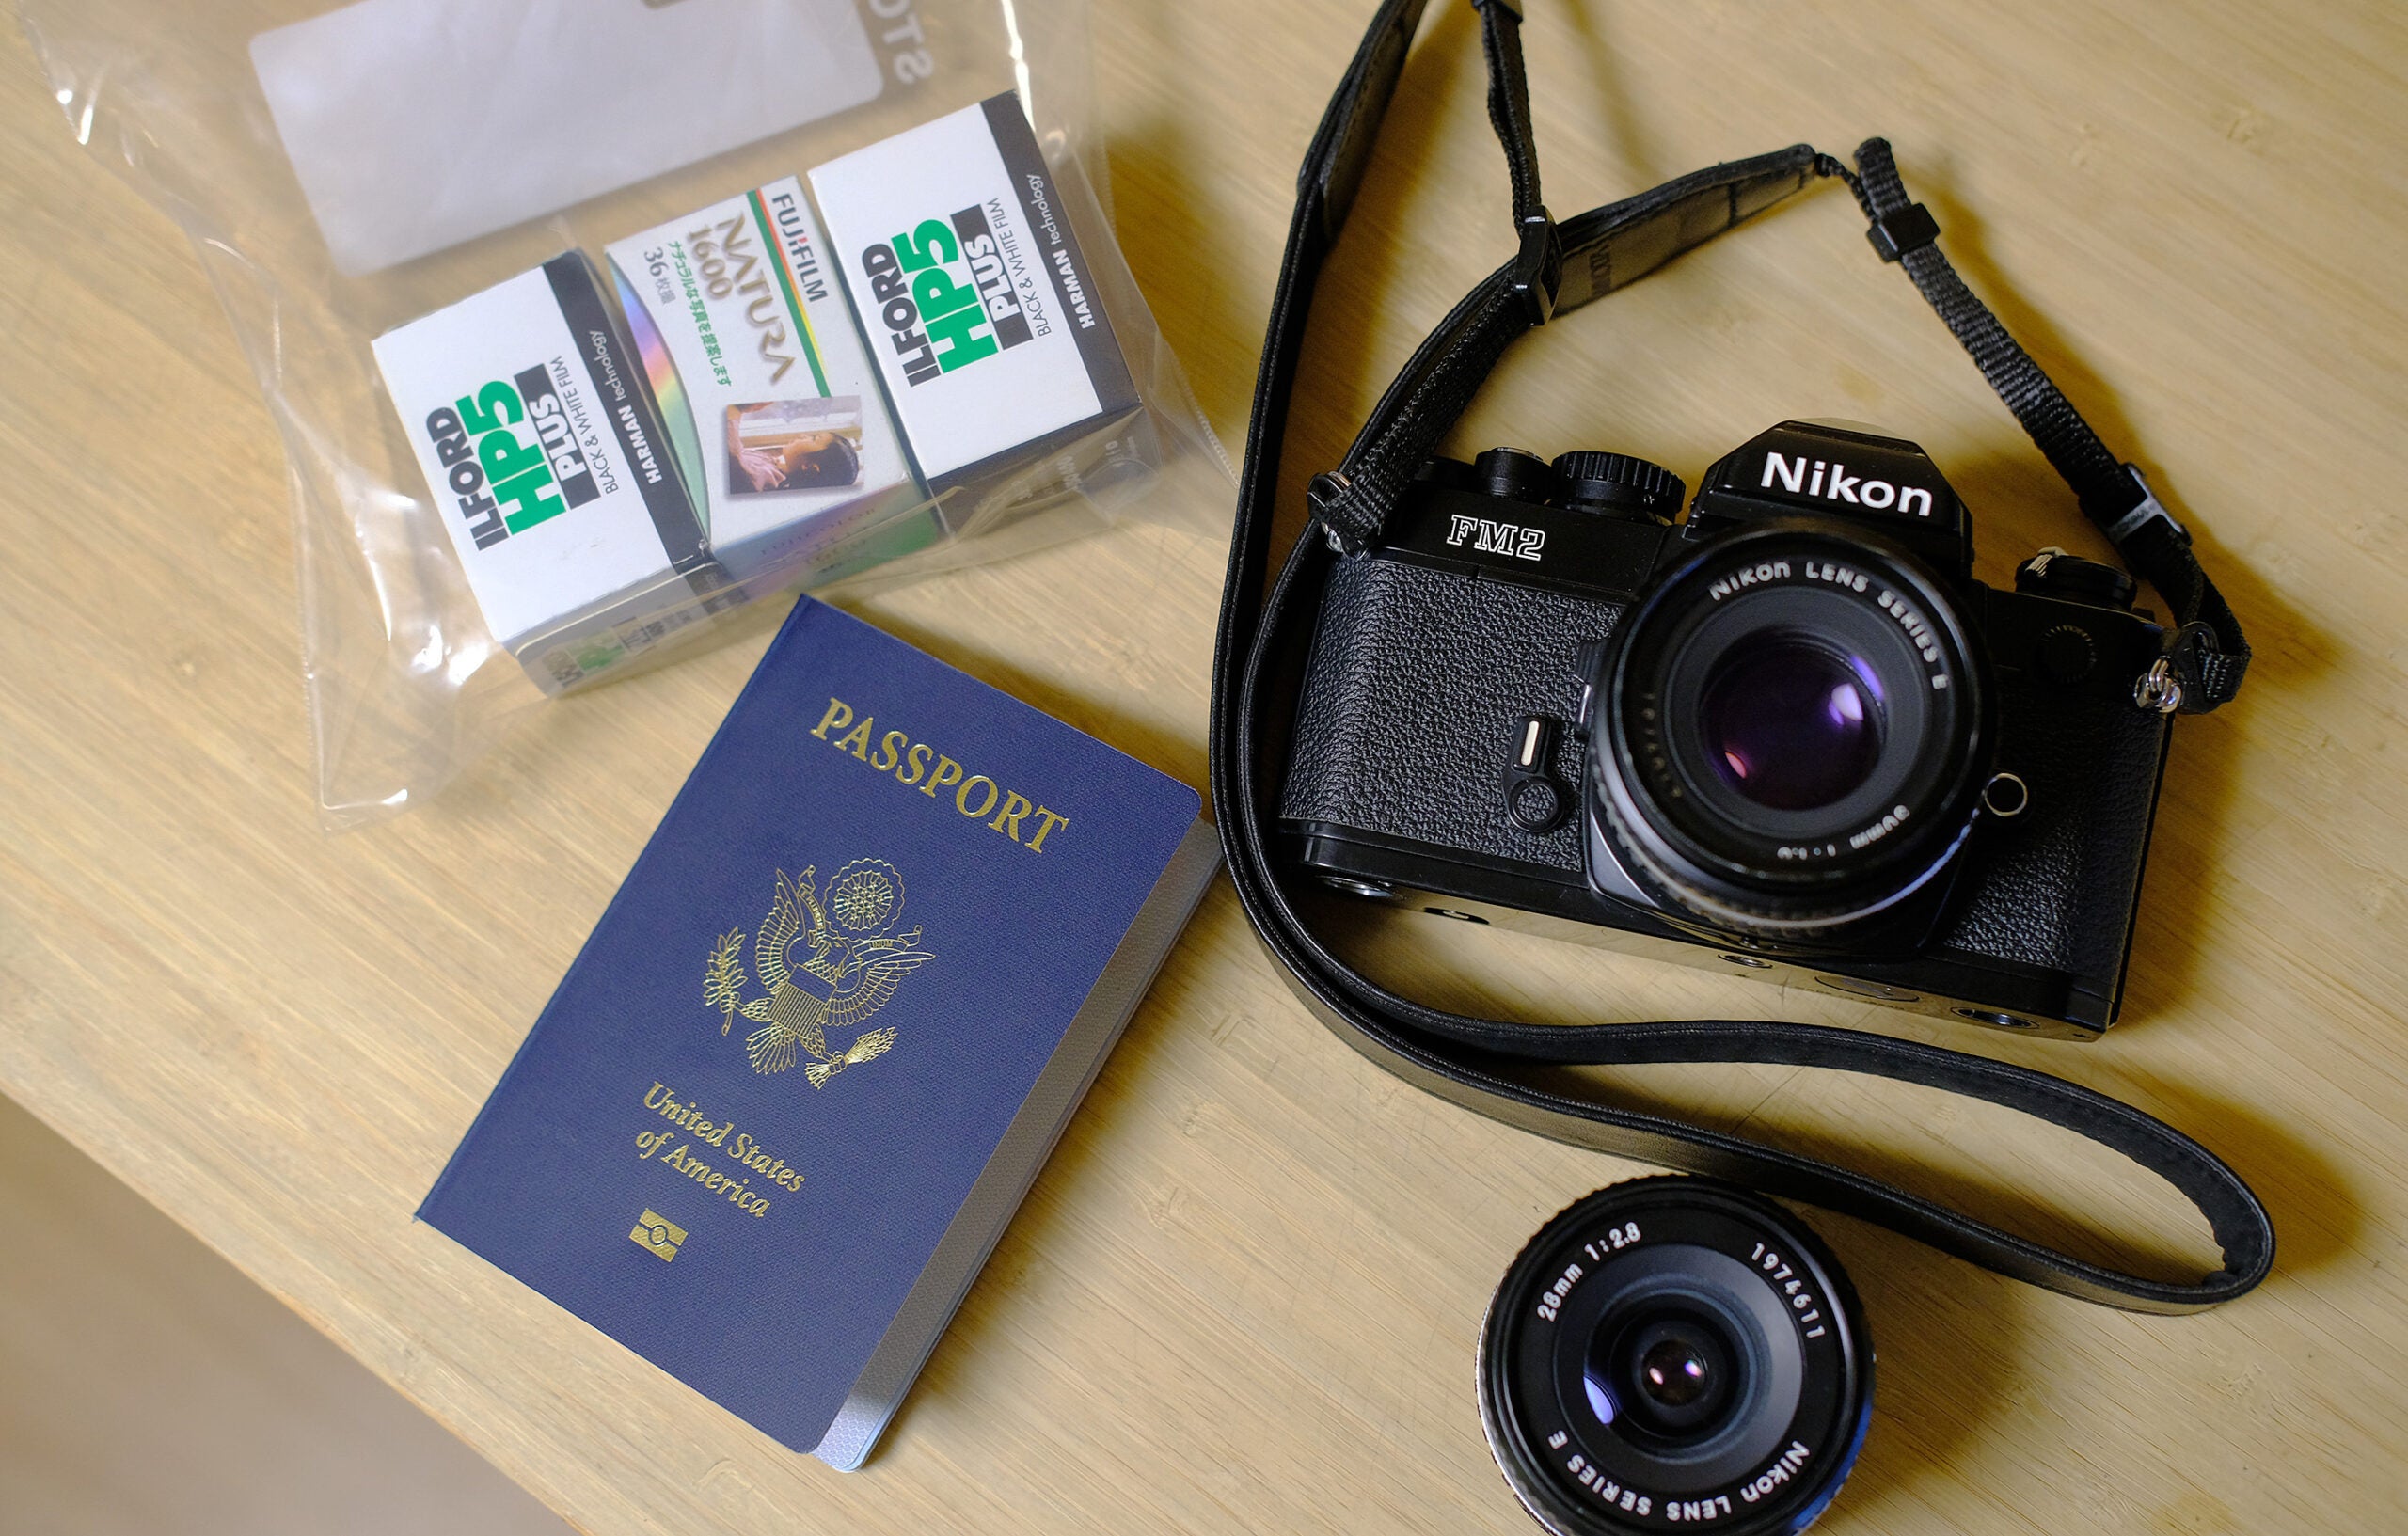 A camera, passport and film.